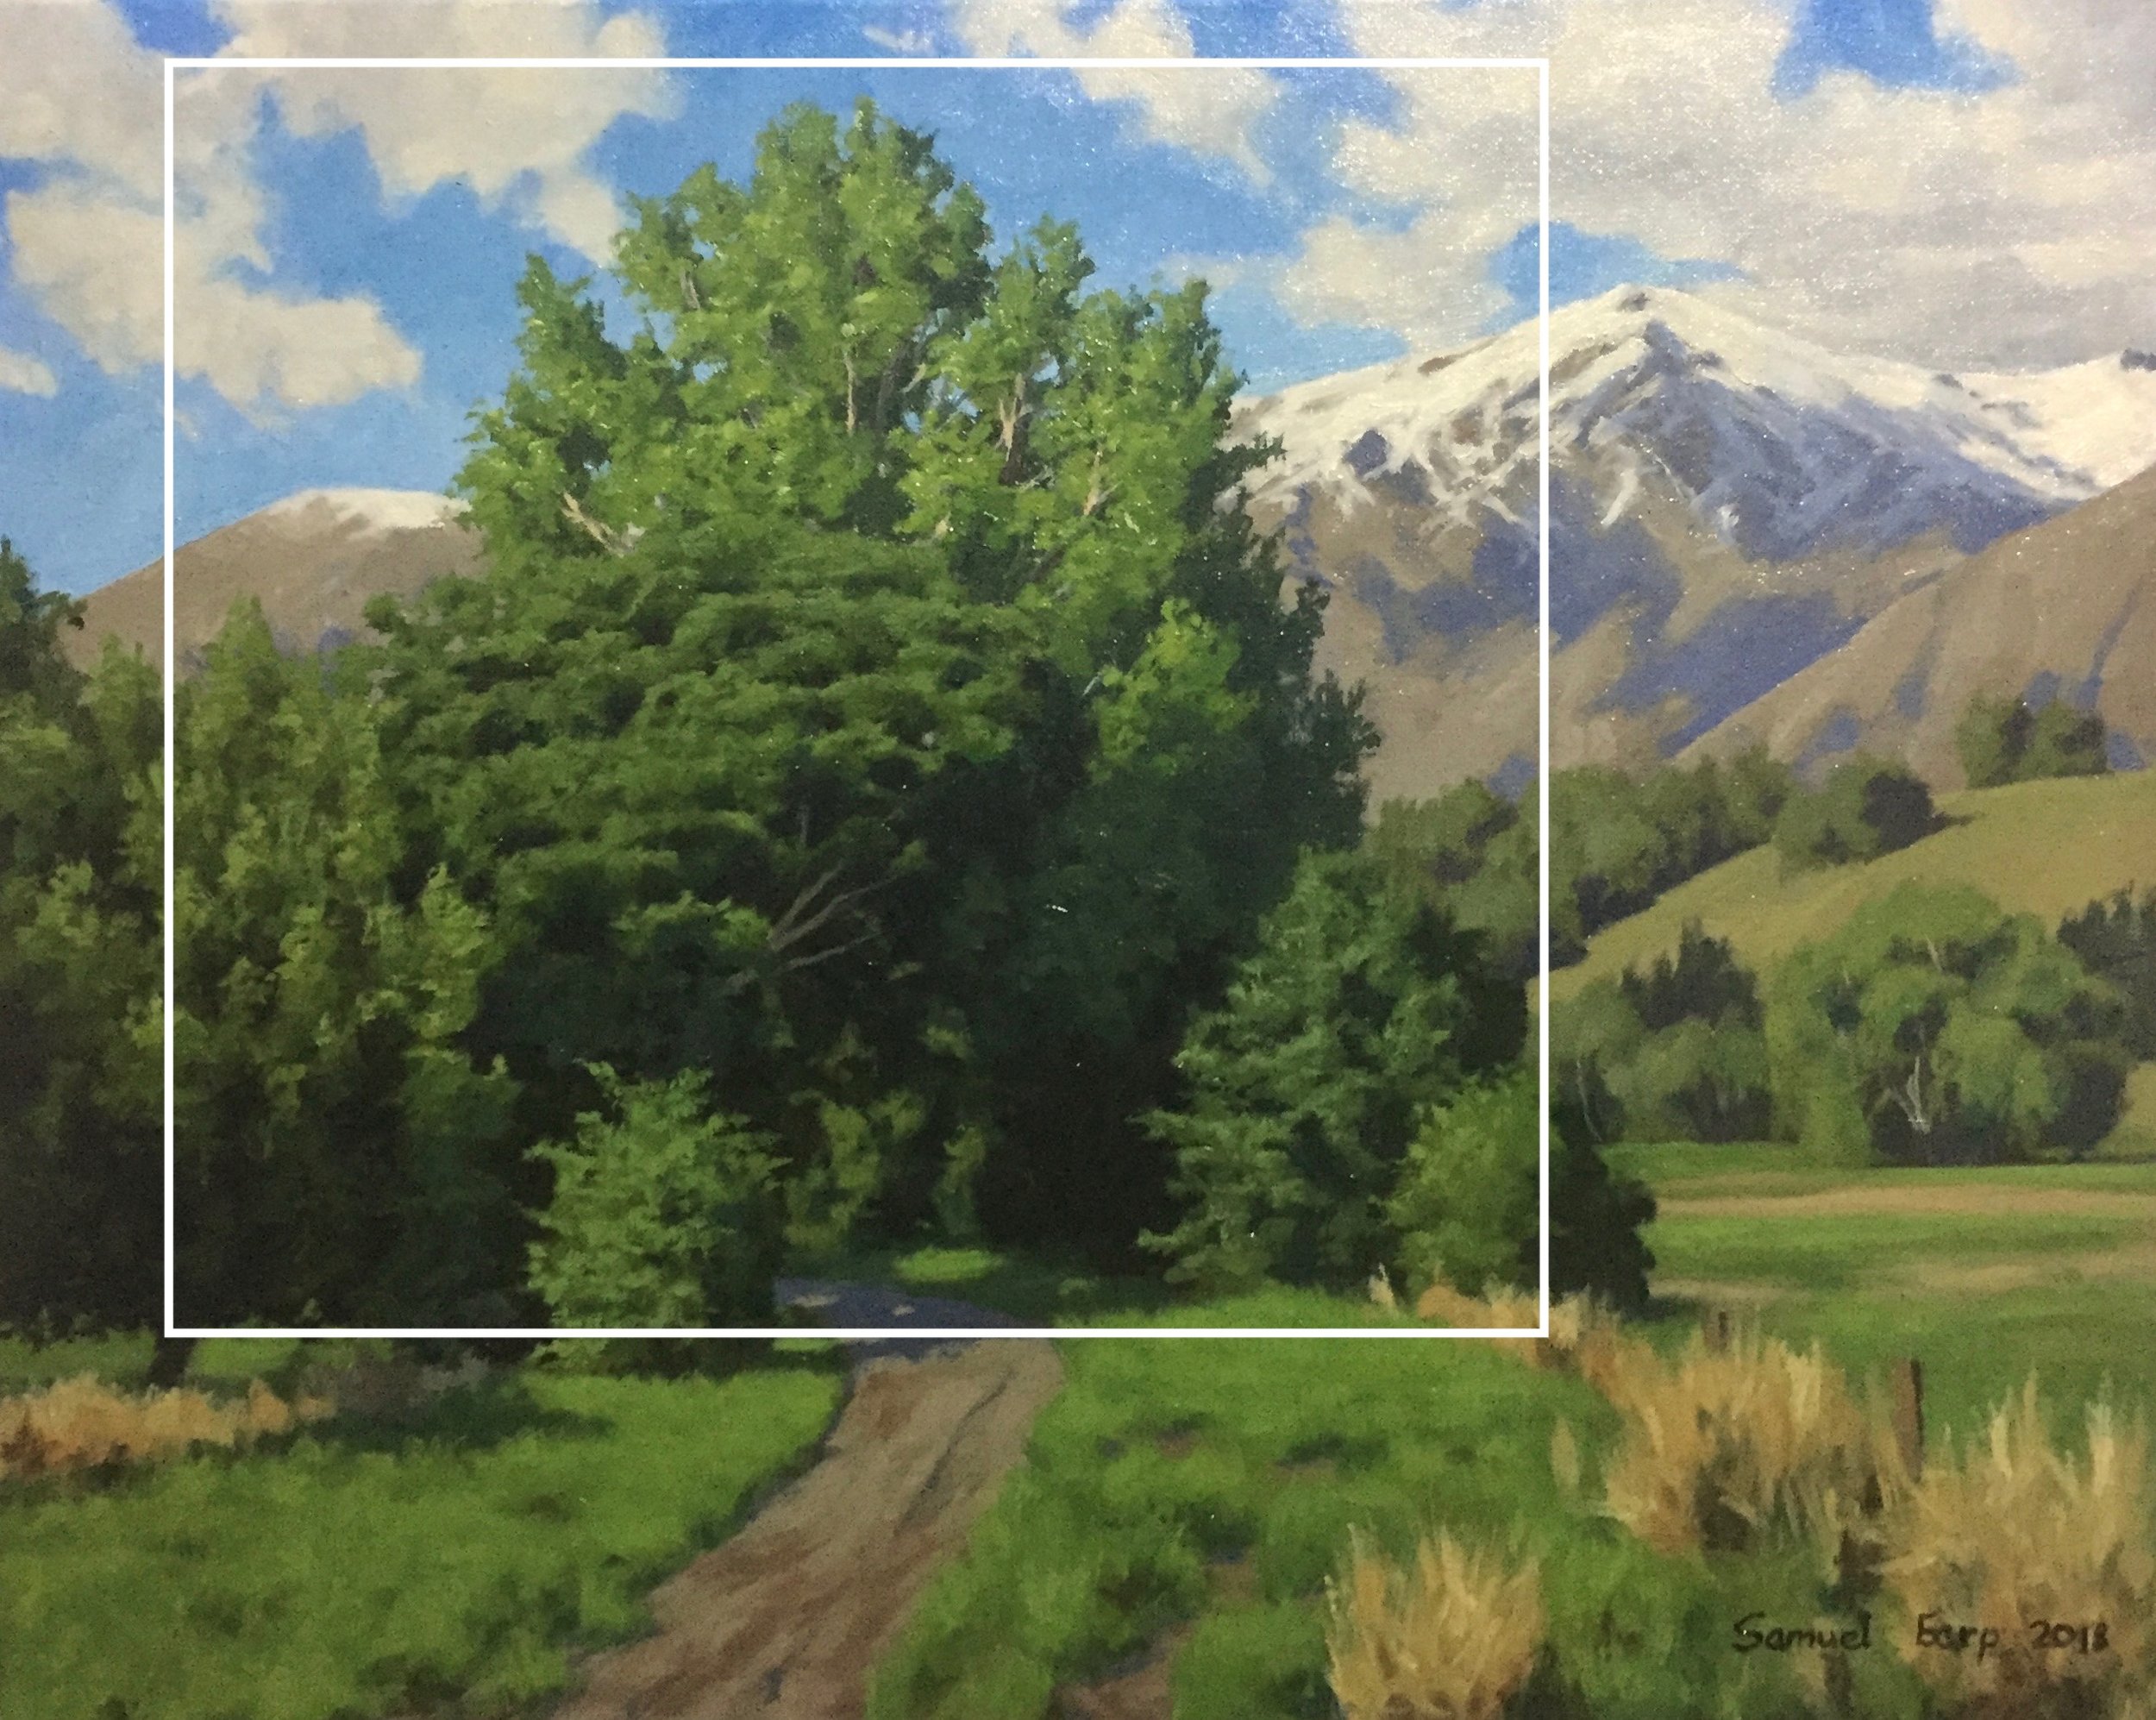 Poplar Trees and the Remarkables Mountains - oil painting - landscape - Samuel Earp - New Zealand landscape artist copy.jpg